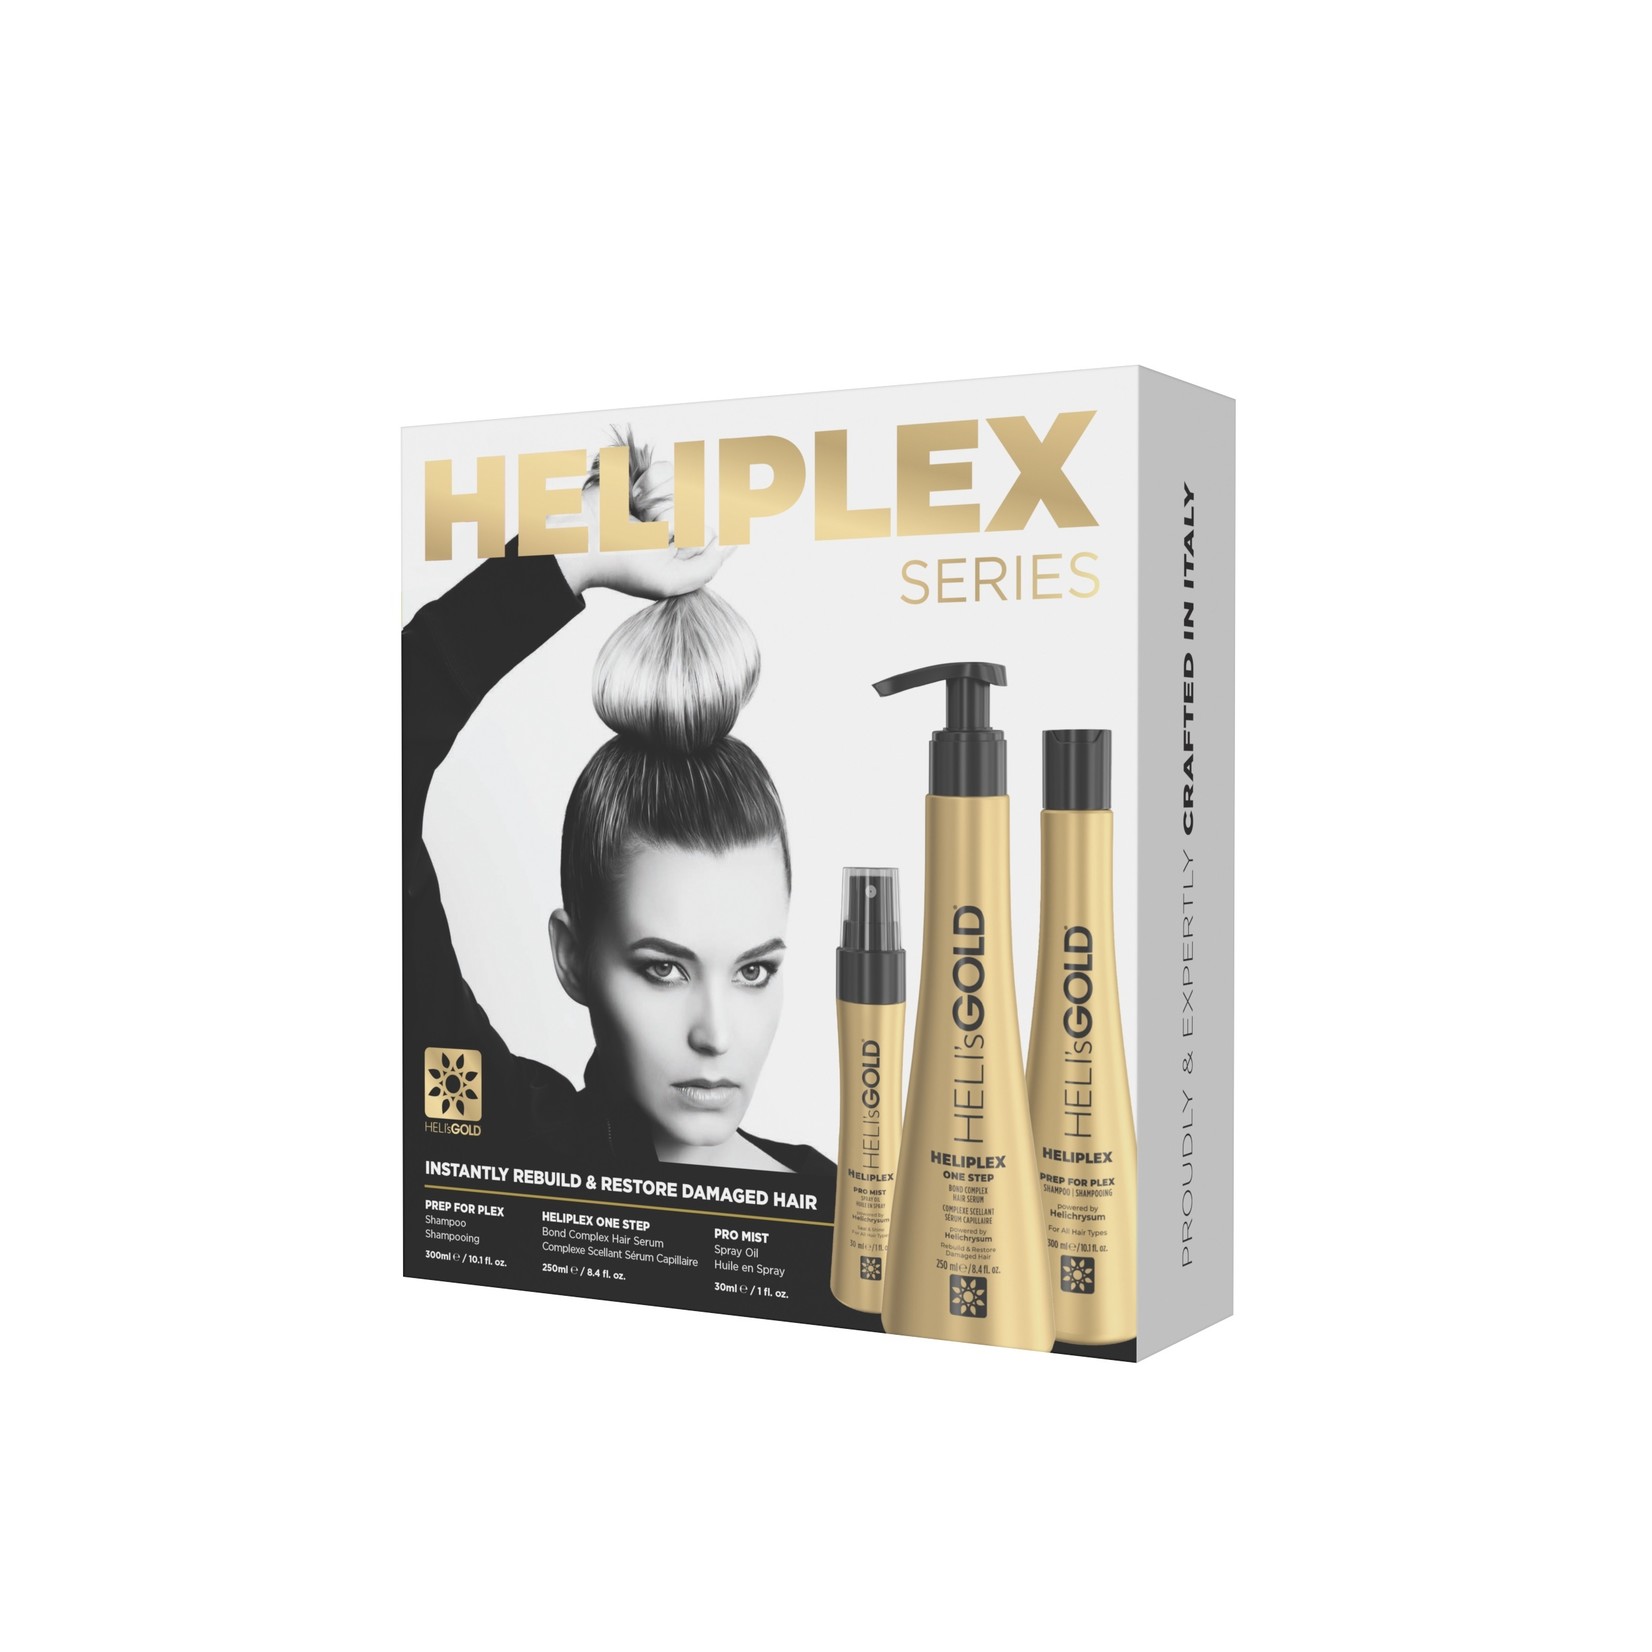 Heli's Gold Heliplex Series Intro Kit